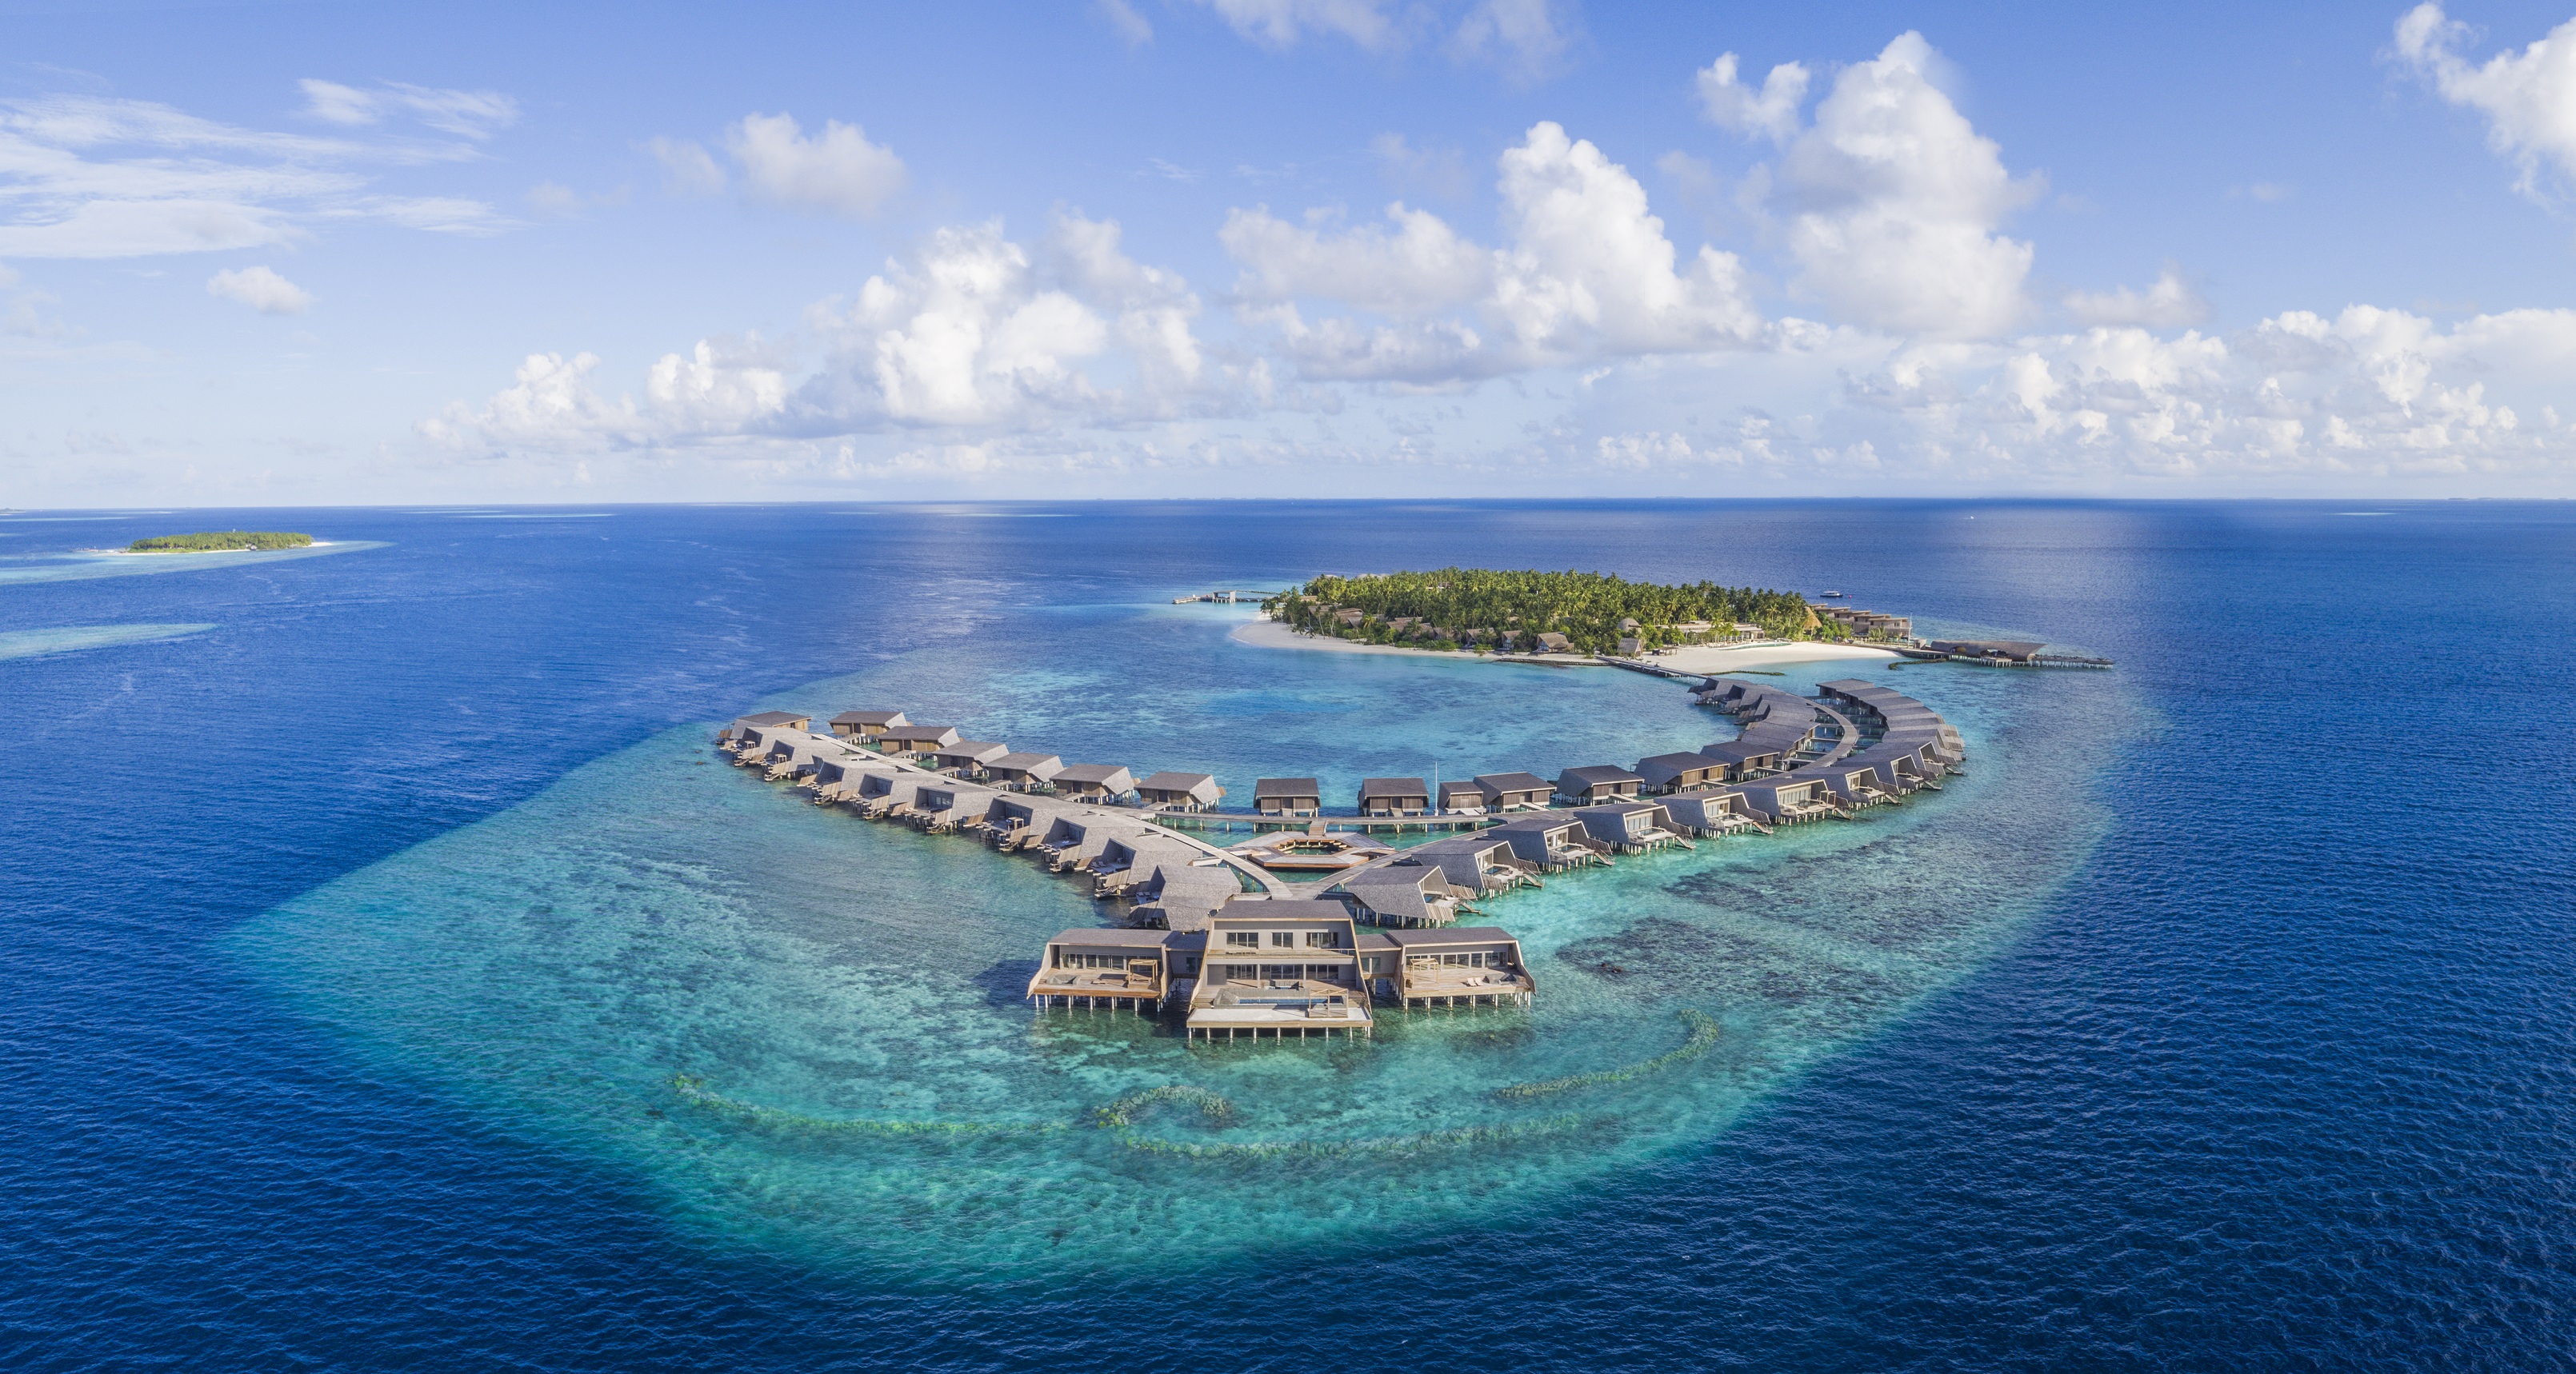 St. Regis Maldives